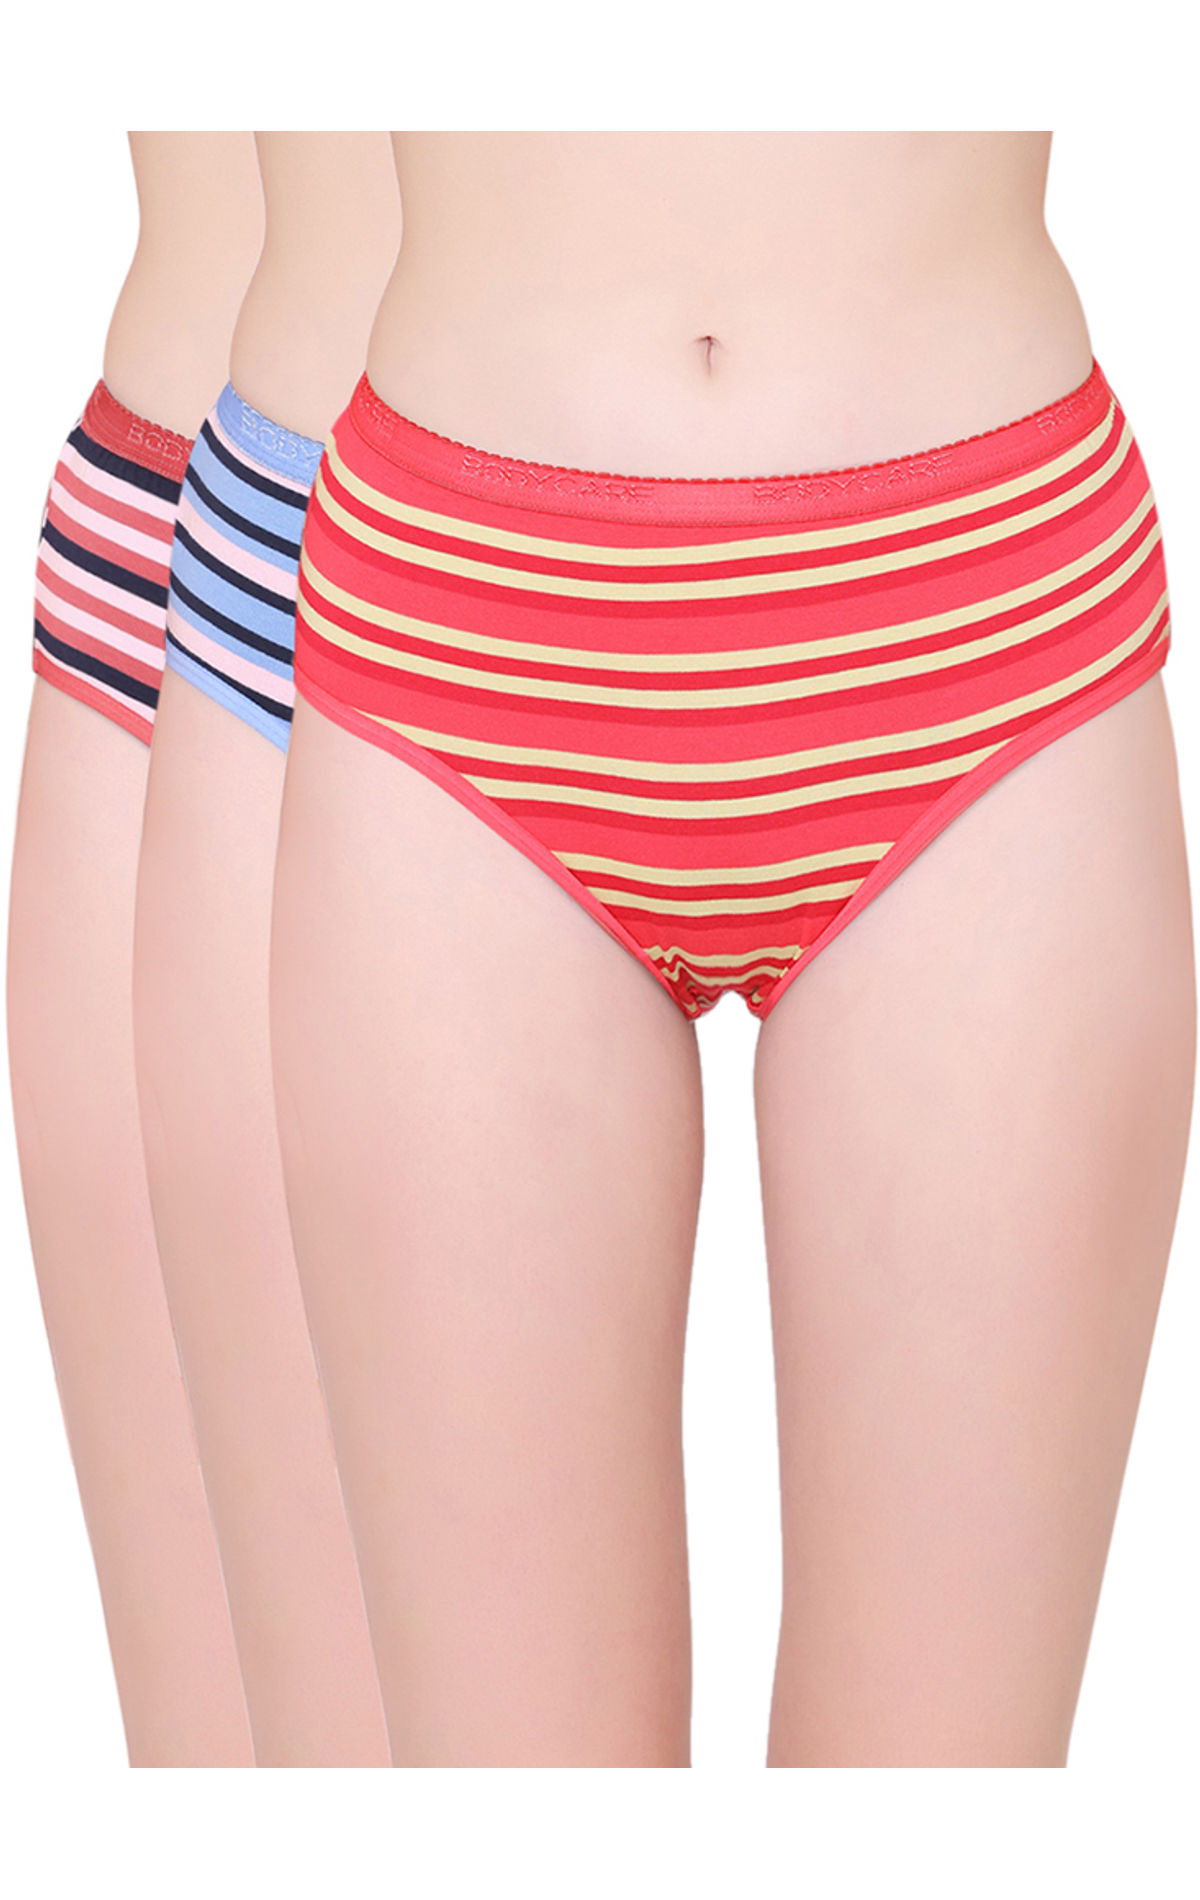 Women's Underwear Breathable Panties (Regular & Plus Size), Low Rise  Brief-Micro Mesh-3 Pack